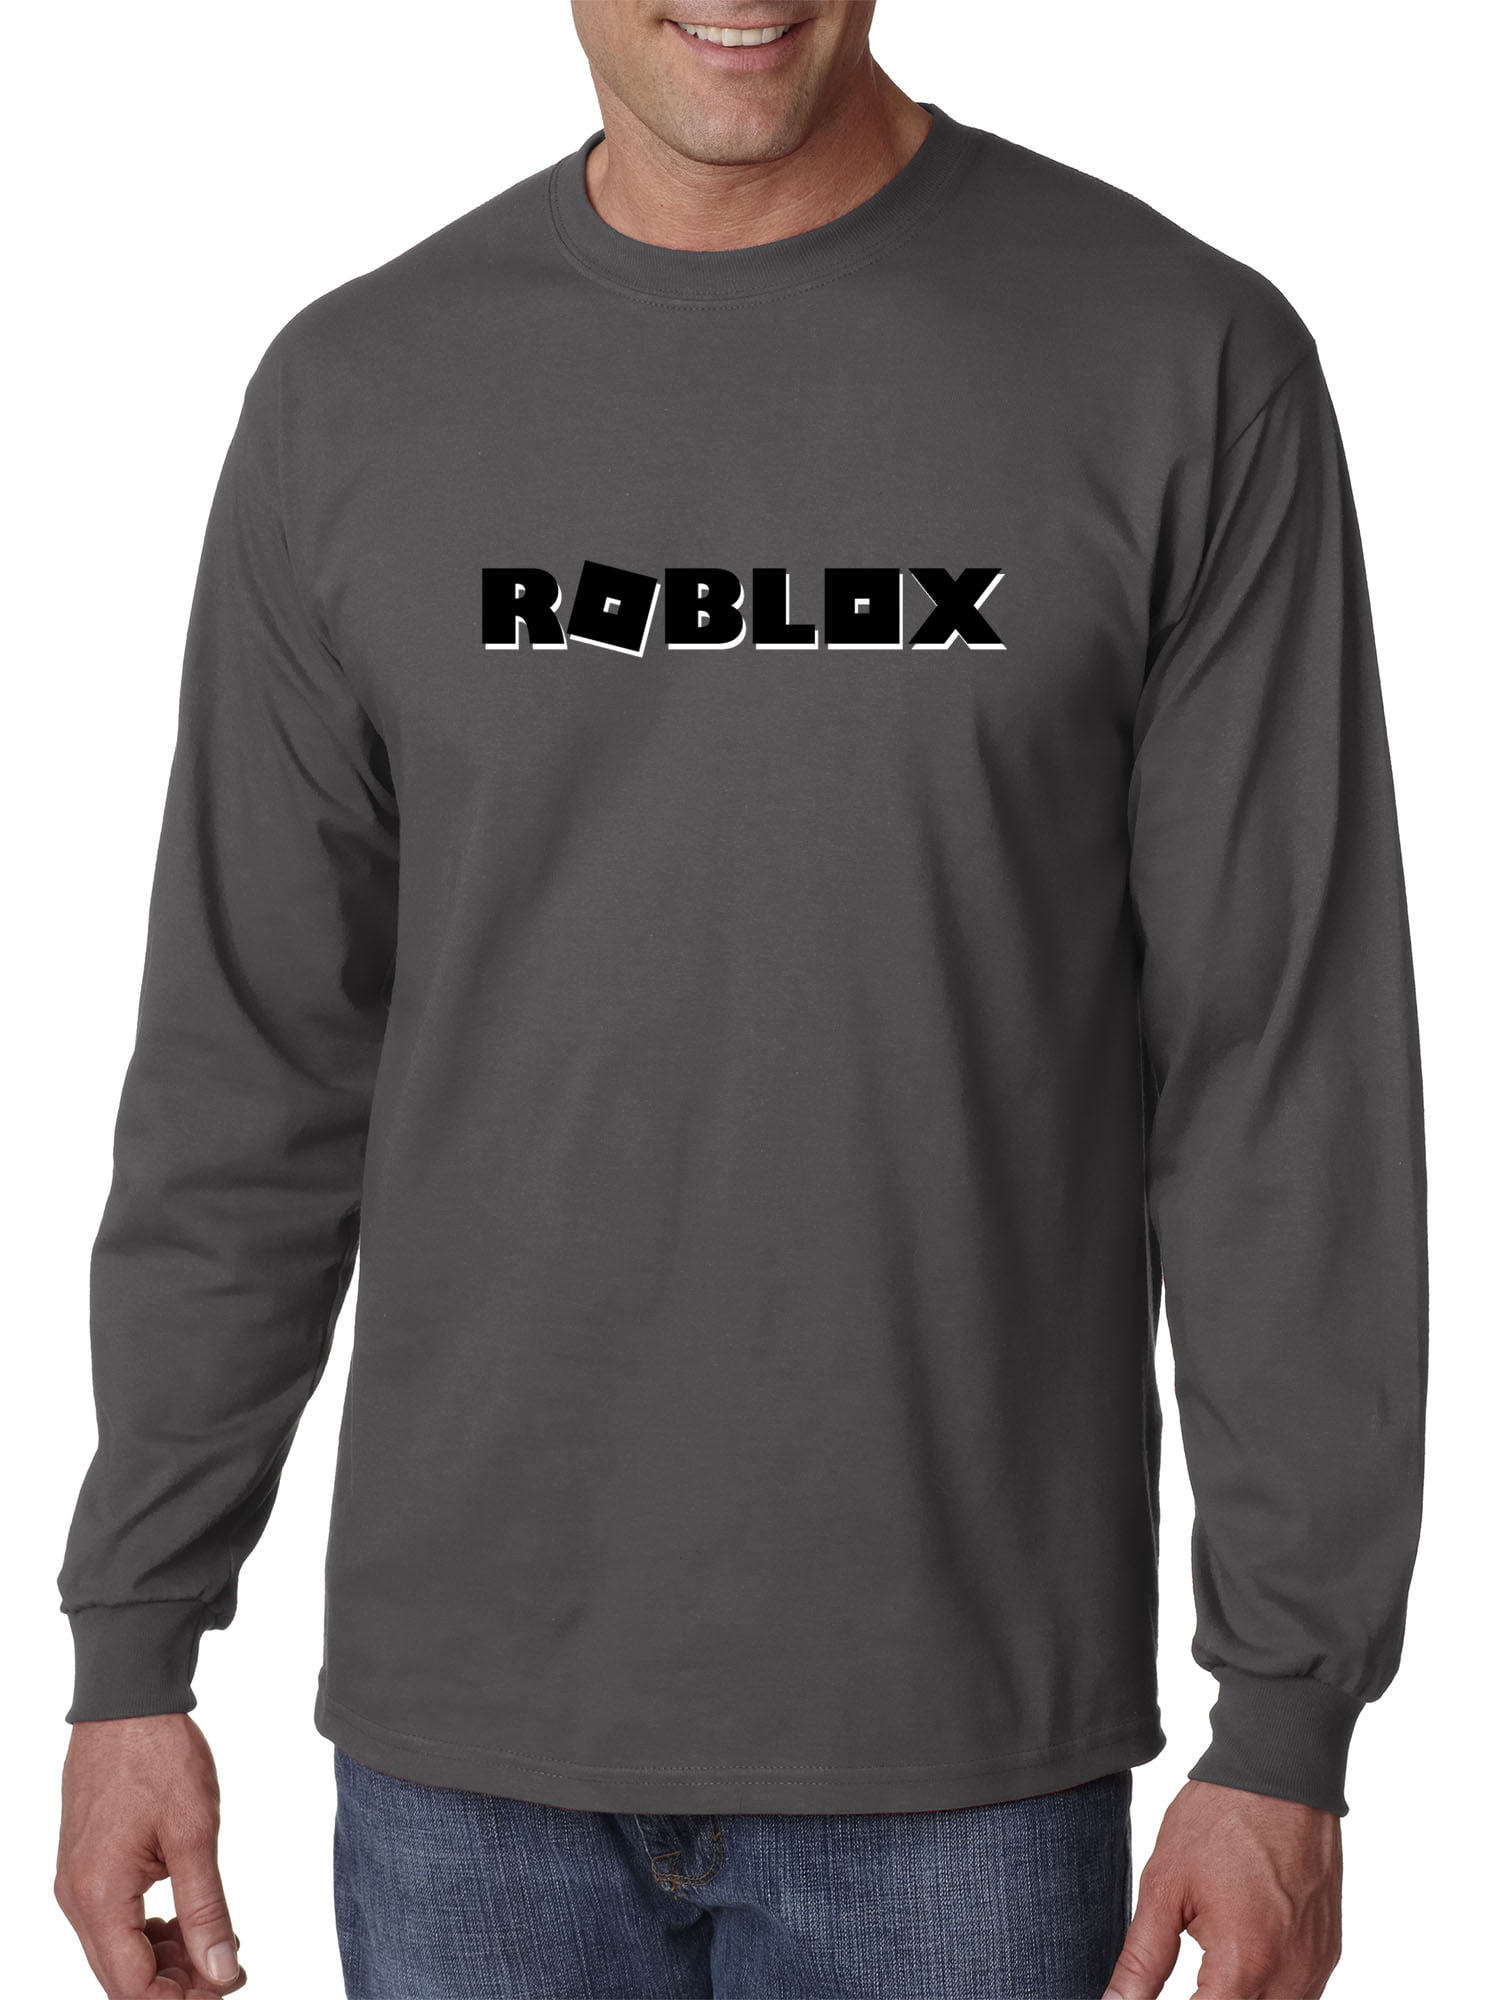 New Way New Way 1168 Unisex Long Sleeve T Shirt Roblox Block Logo Game Accent Medium Charcoal Walmart Com Walmart Com